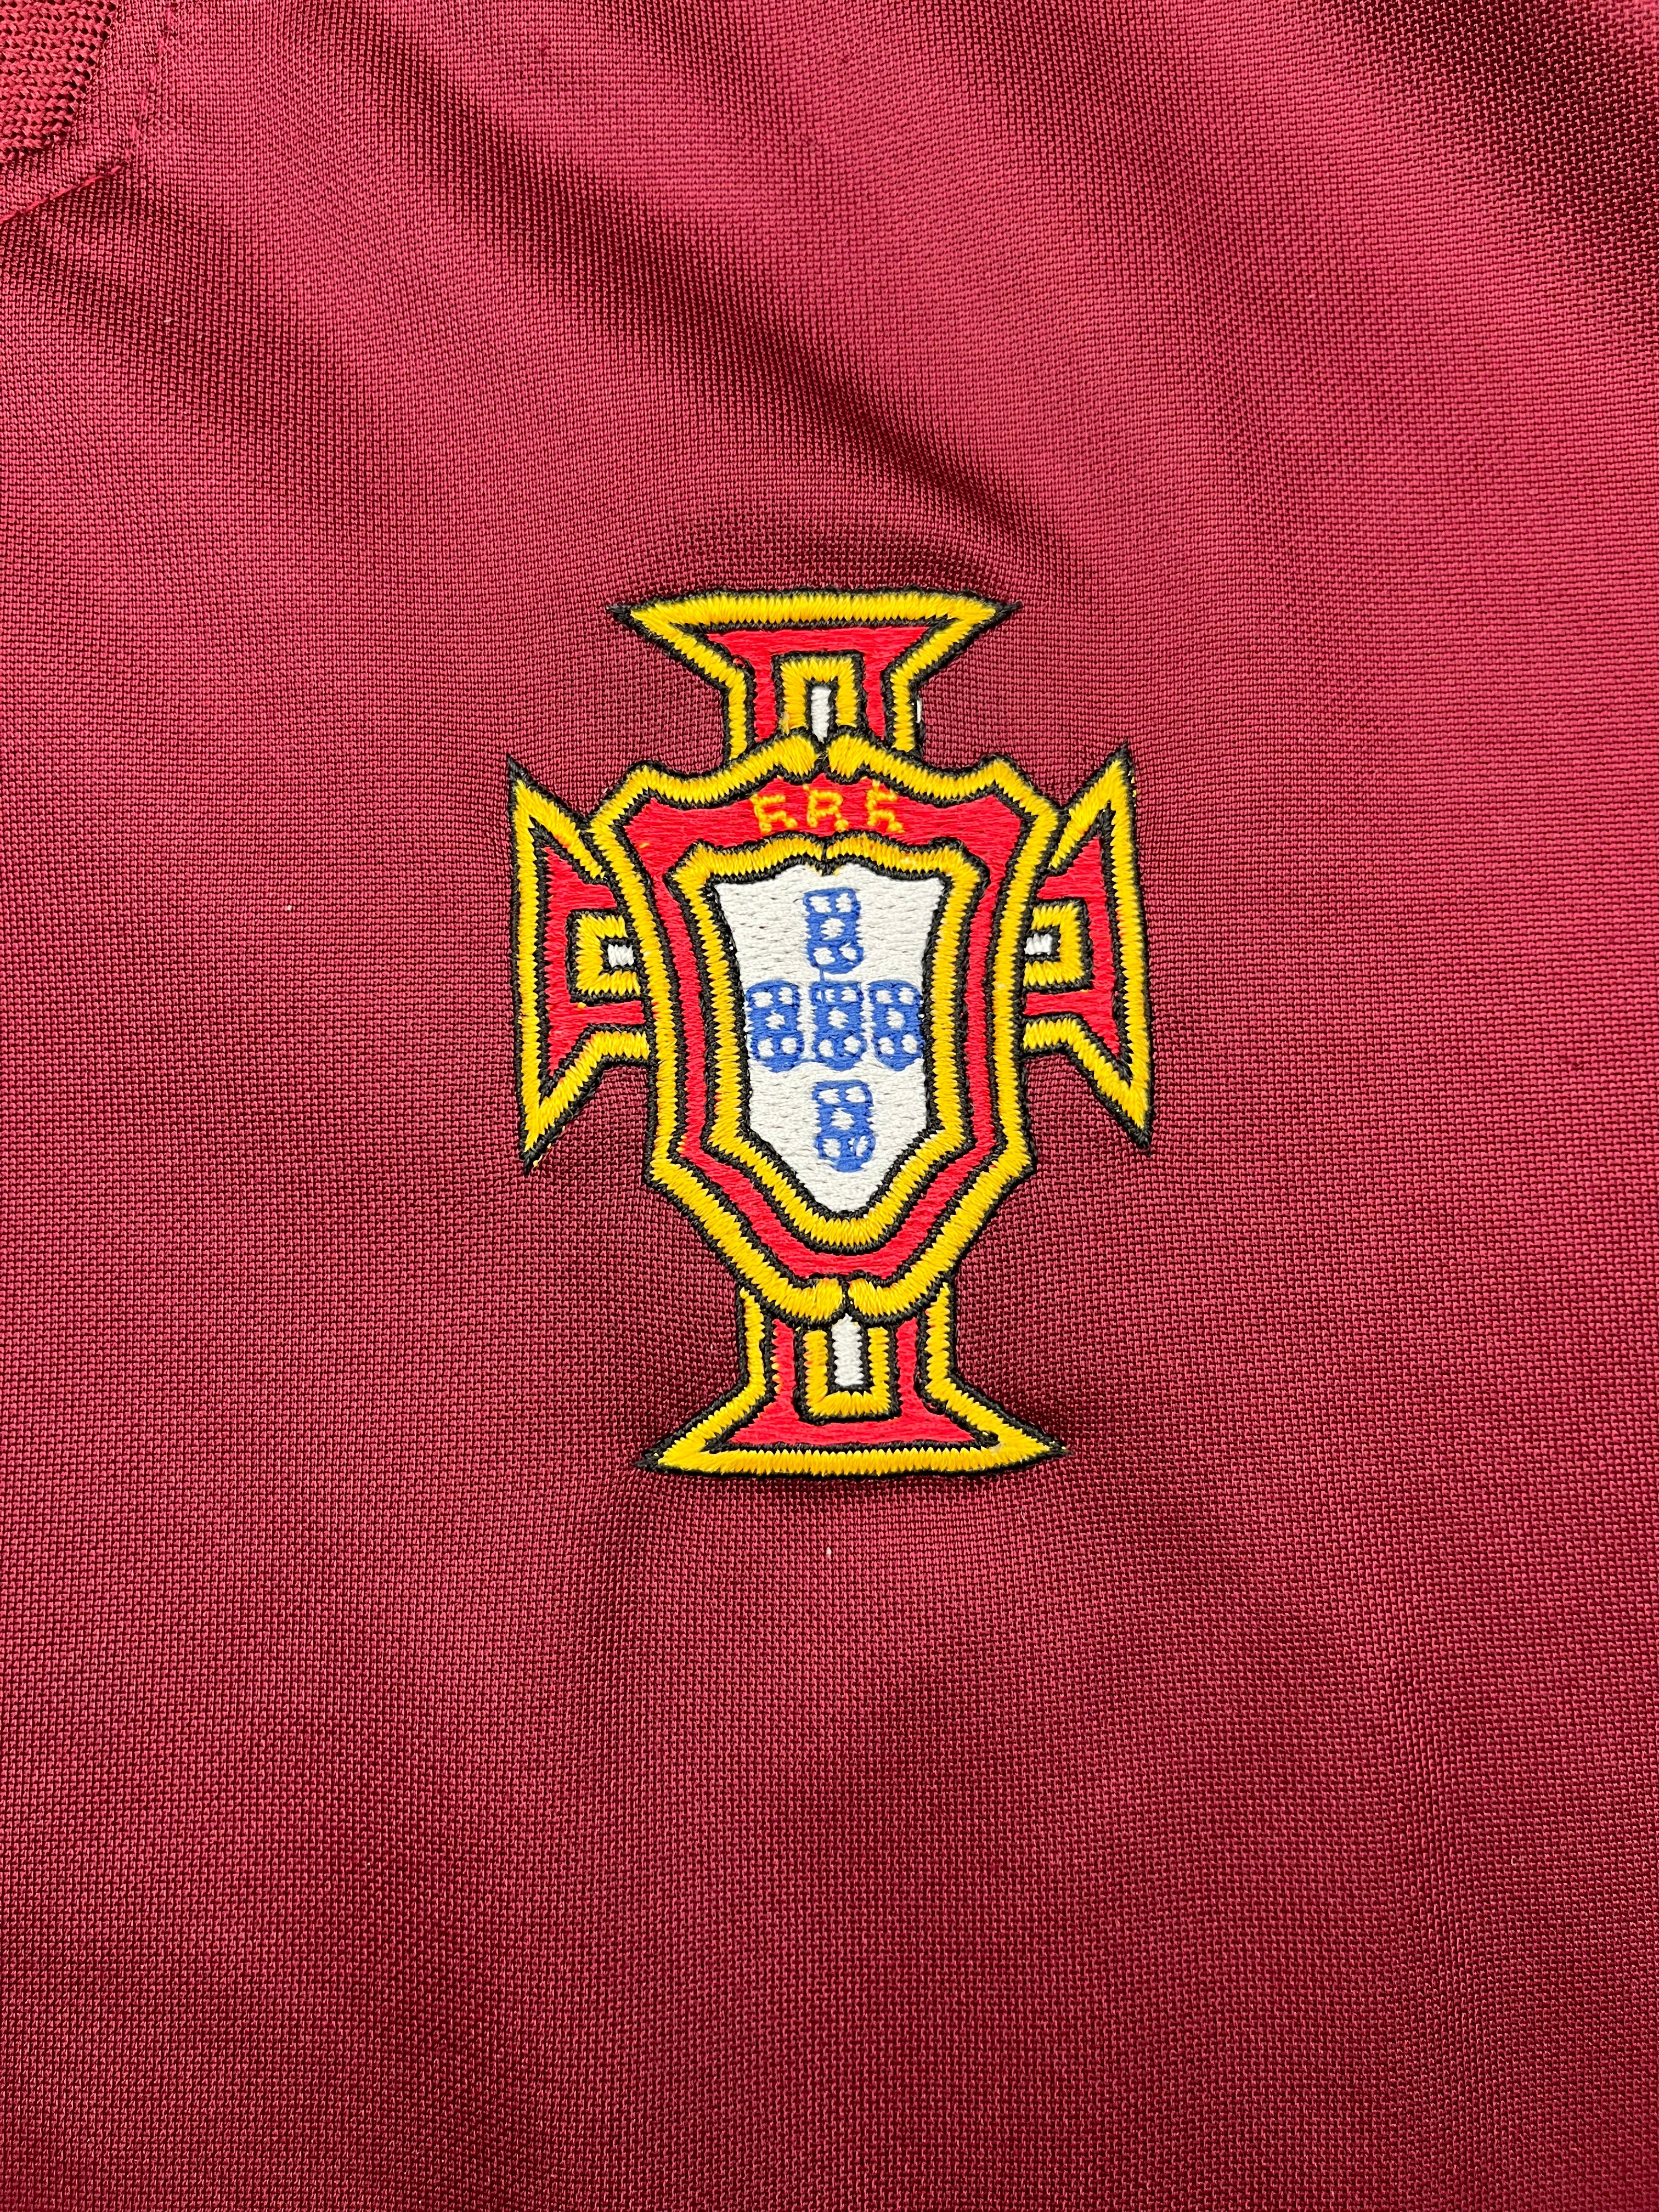 1998/00 Portugal Home Shirt (L) 8.5/10